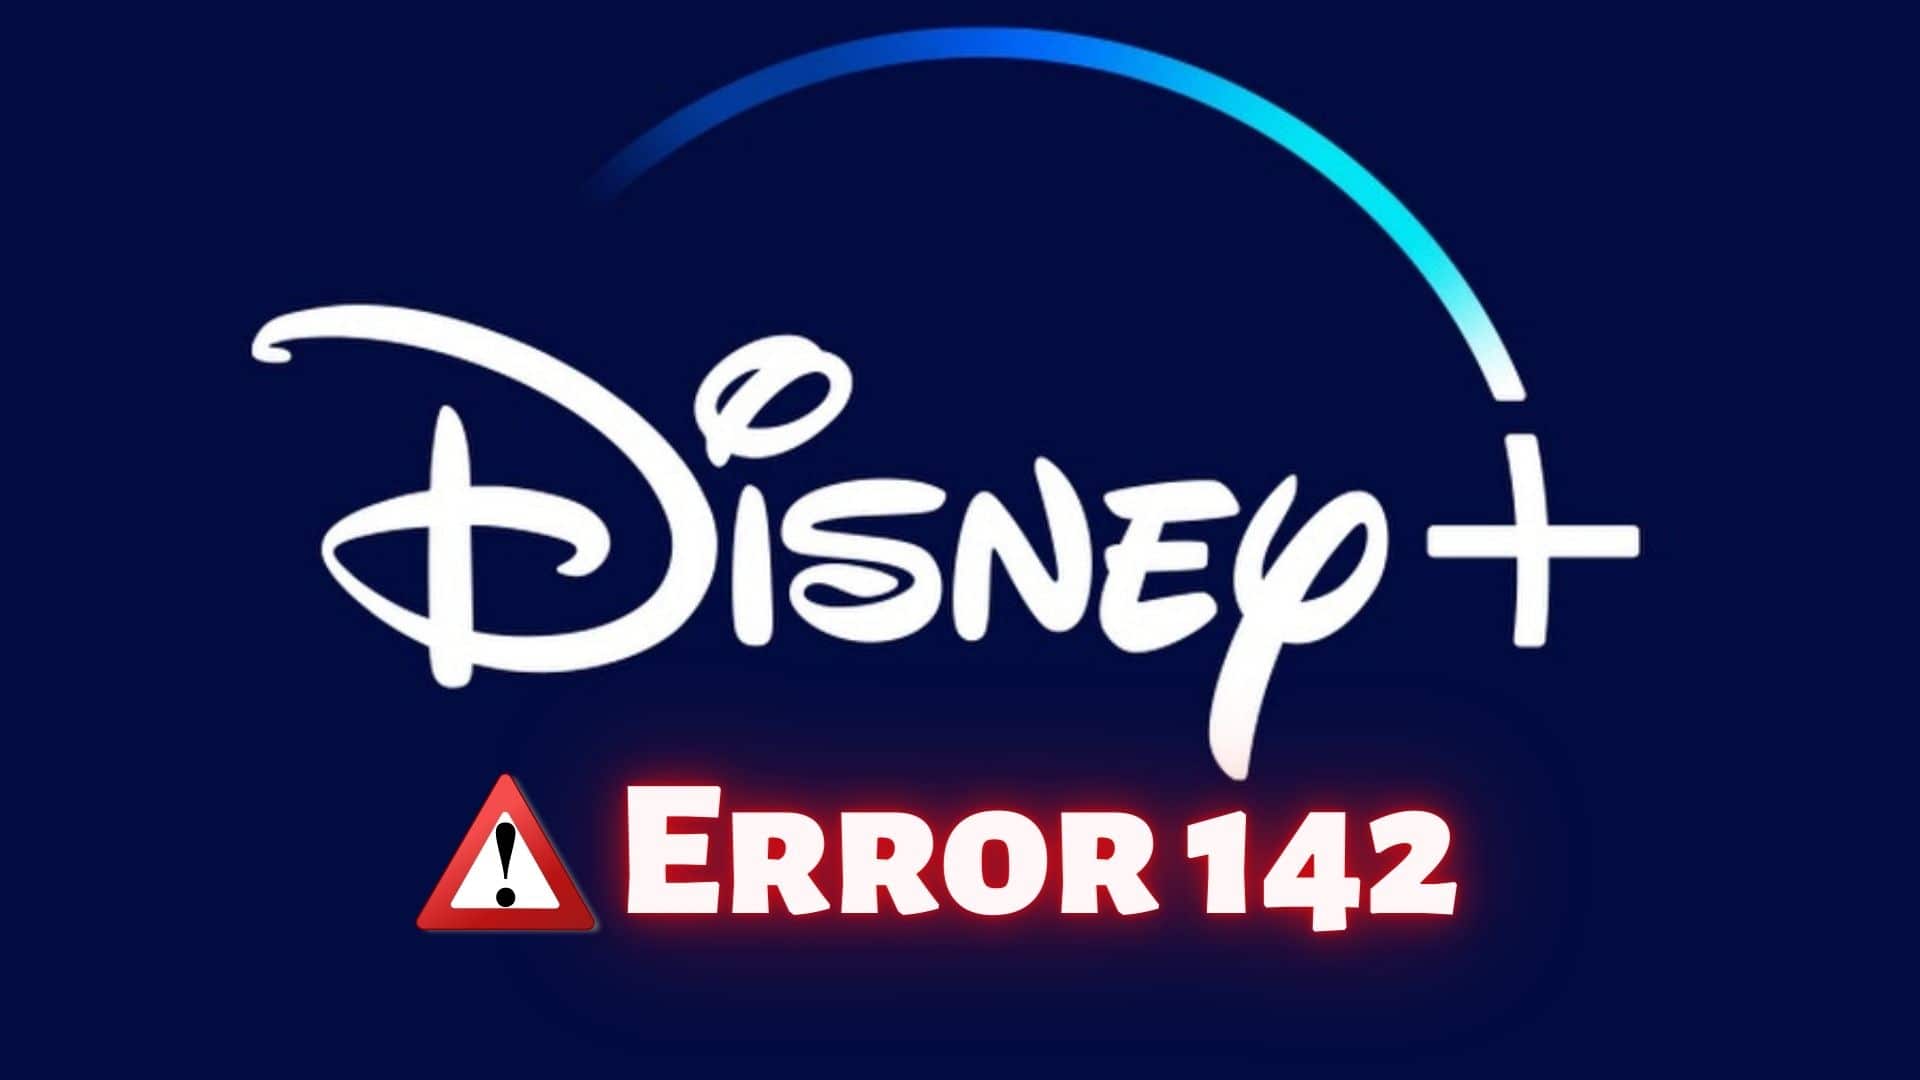 9 Ways to Fix Disney Plus Error Code 42